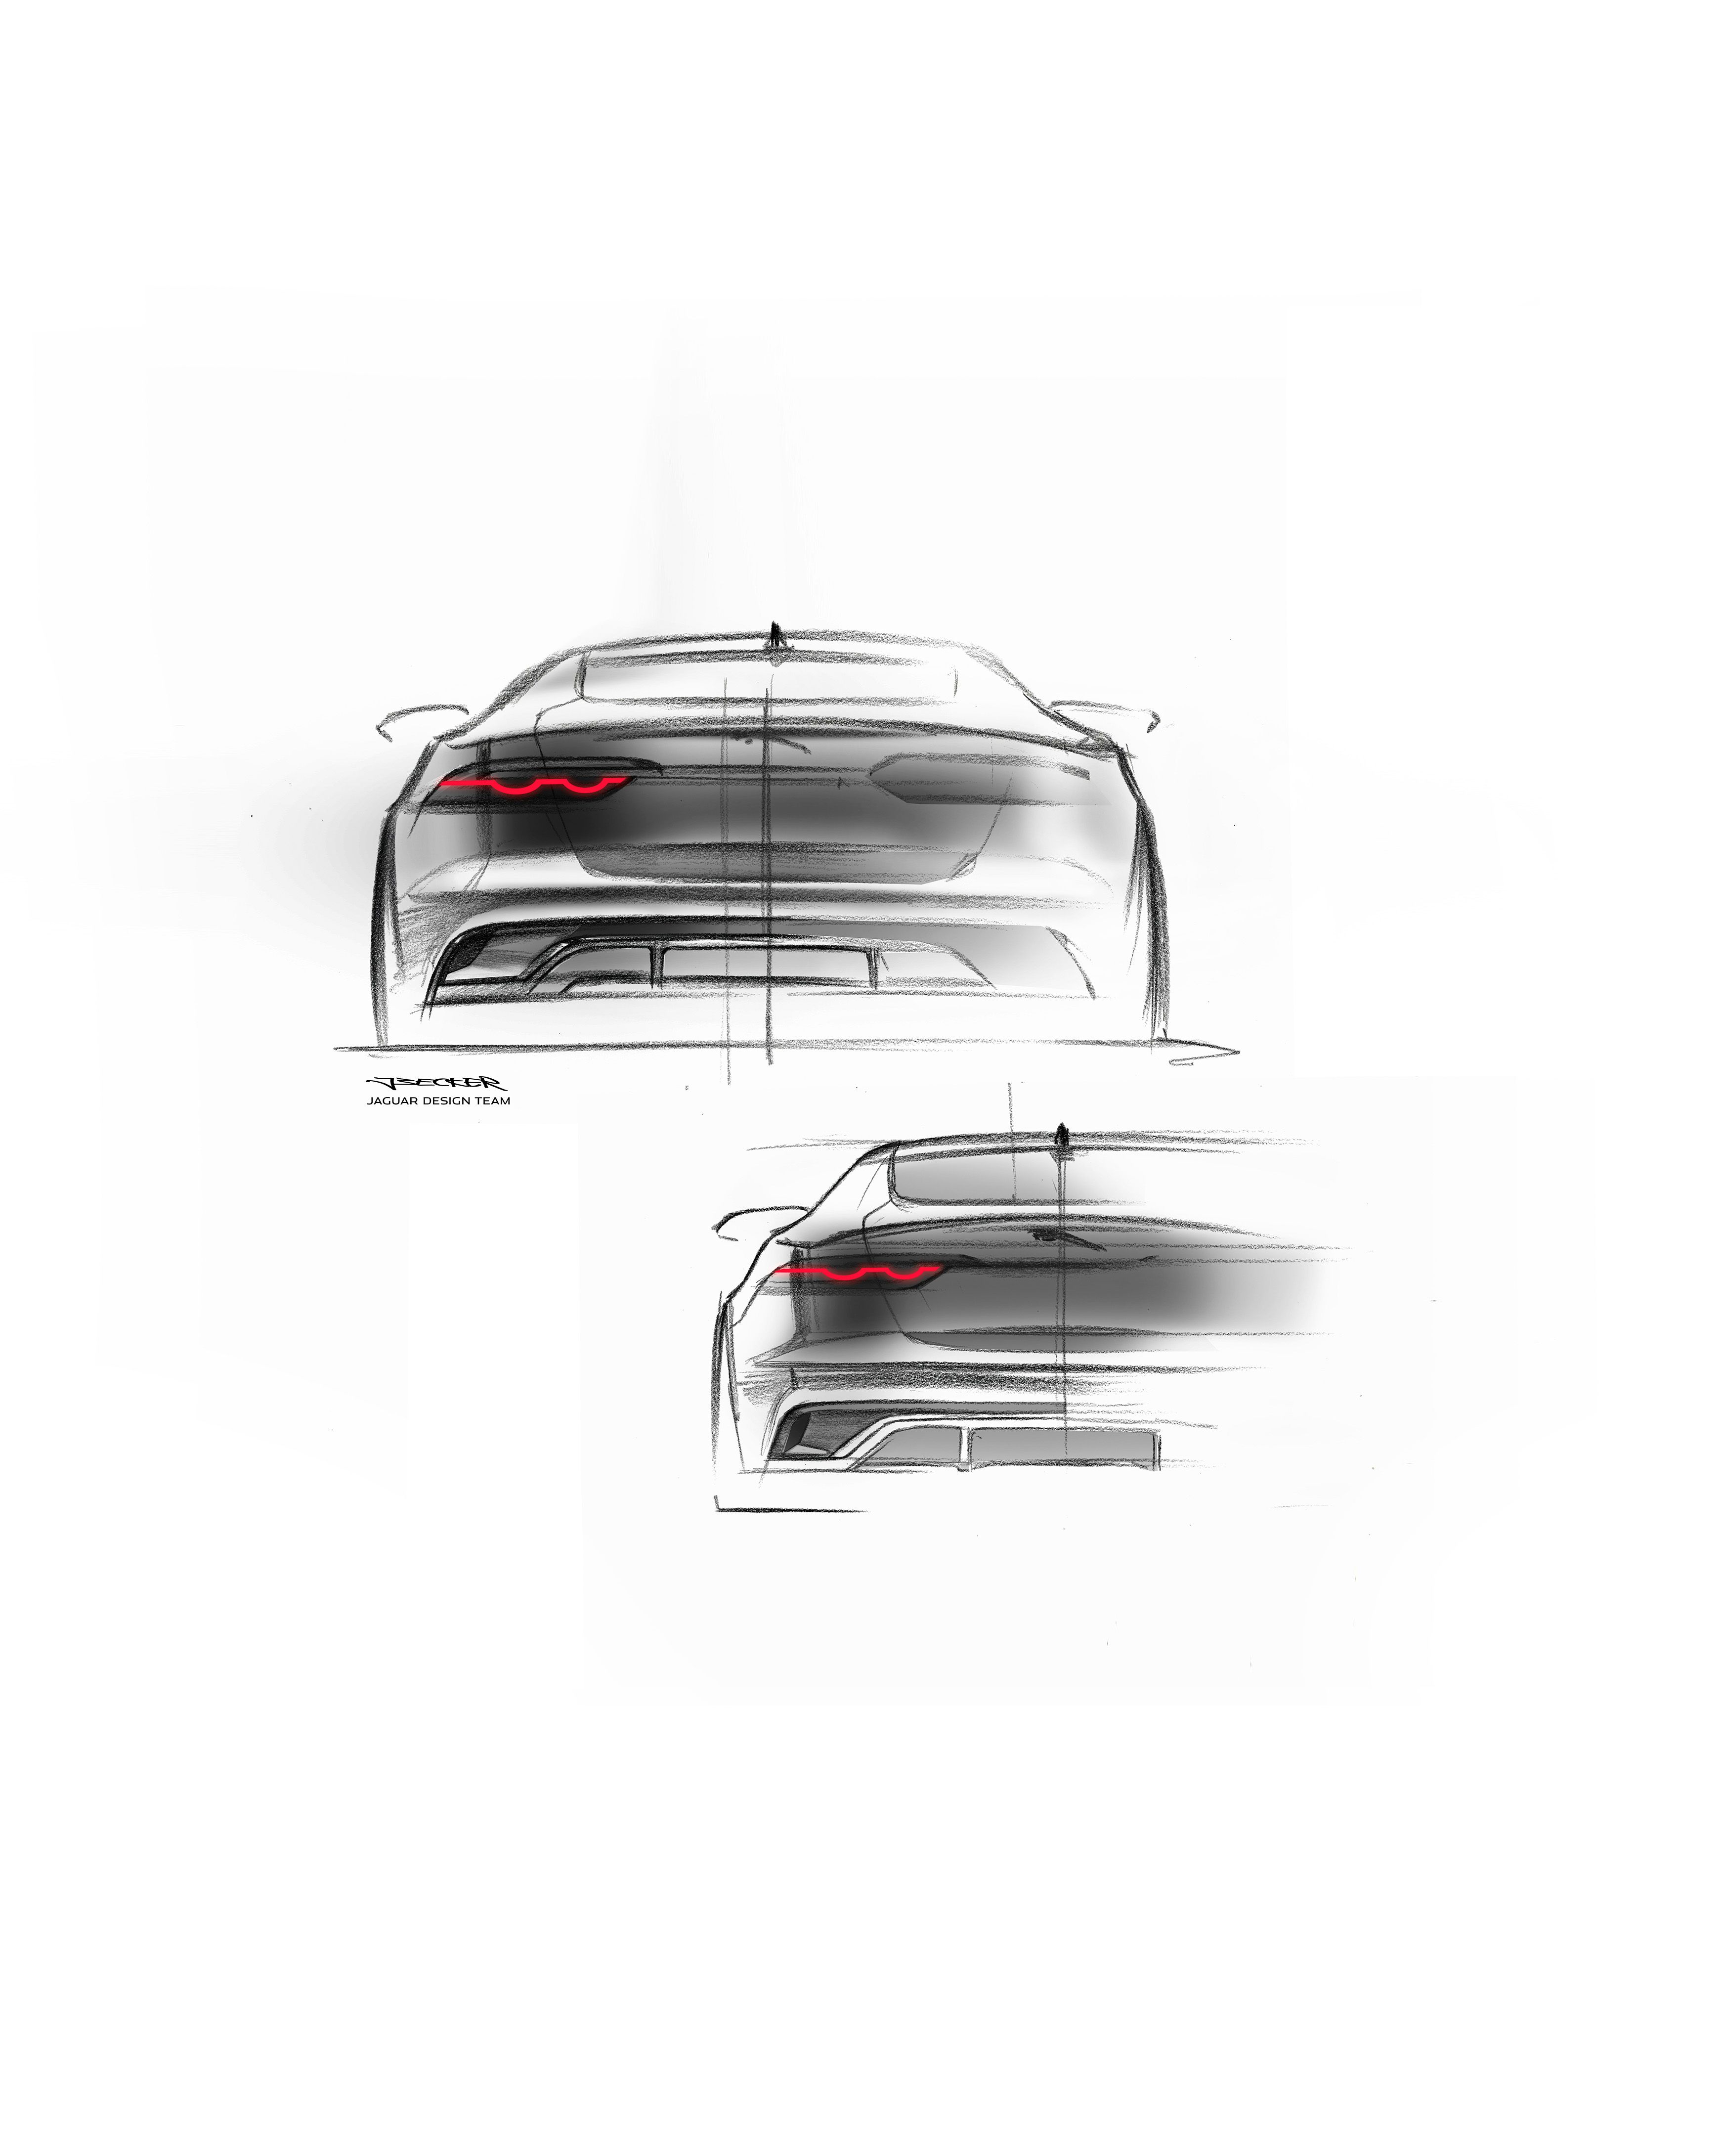 2021 Jaguar XF